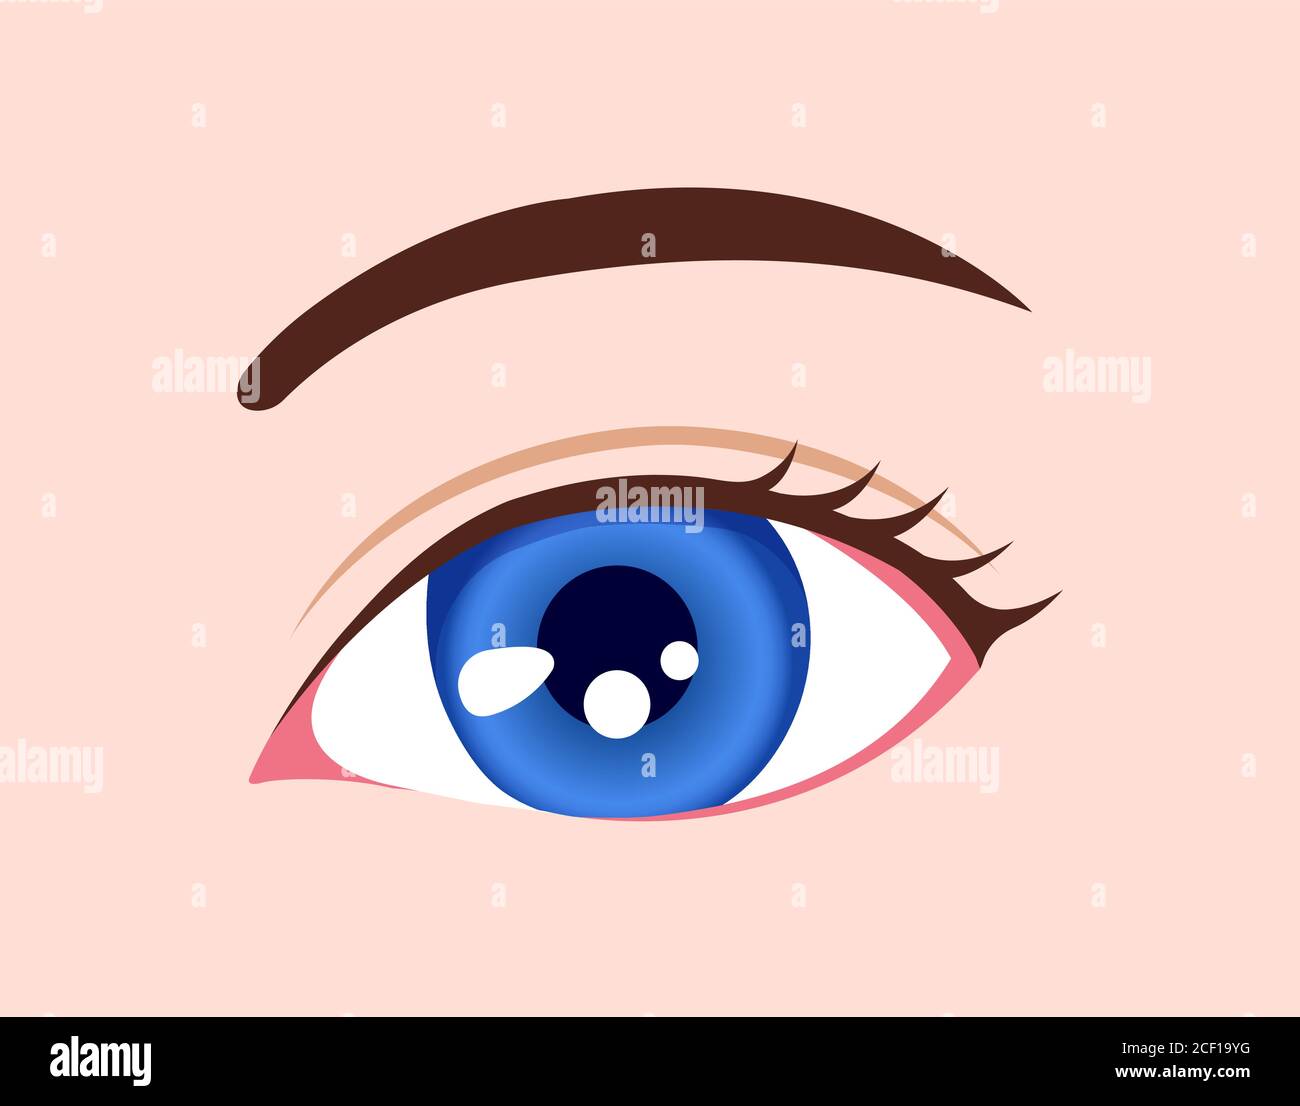 Human eyeball / eye color illustration (blue) Stock Vector